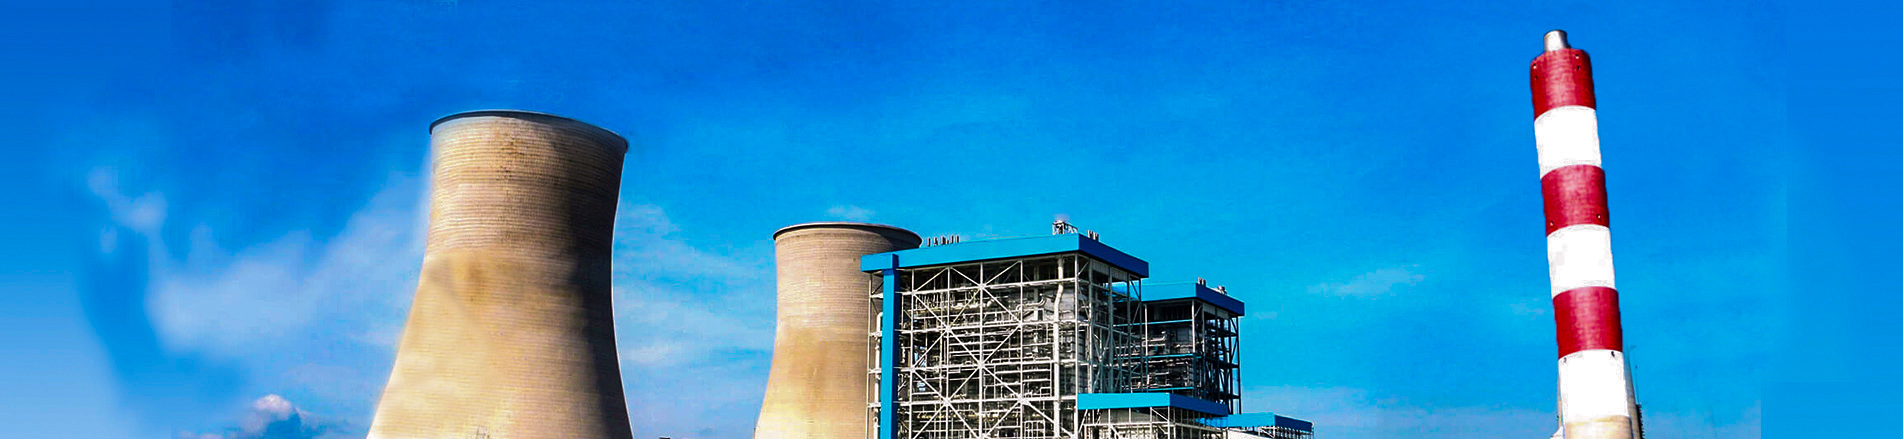 Large capacity power plant